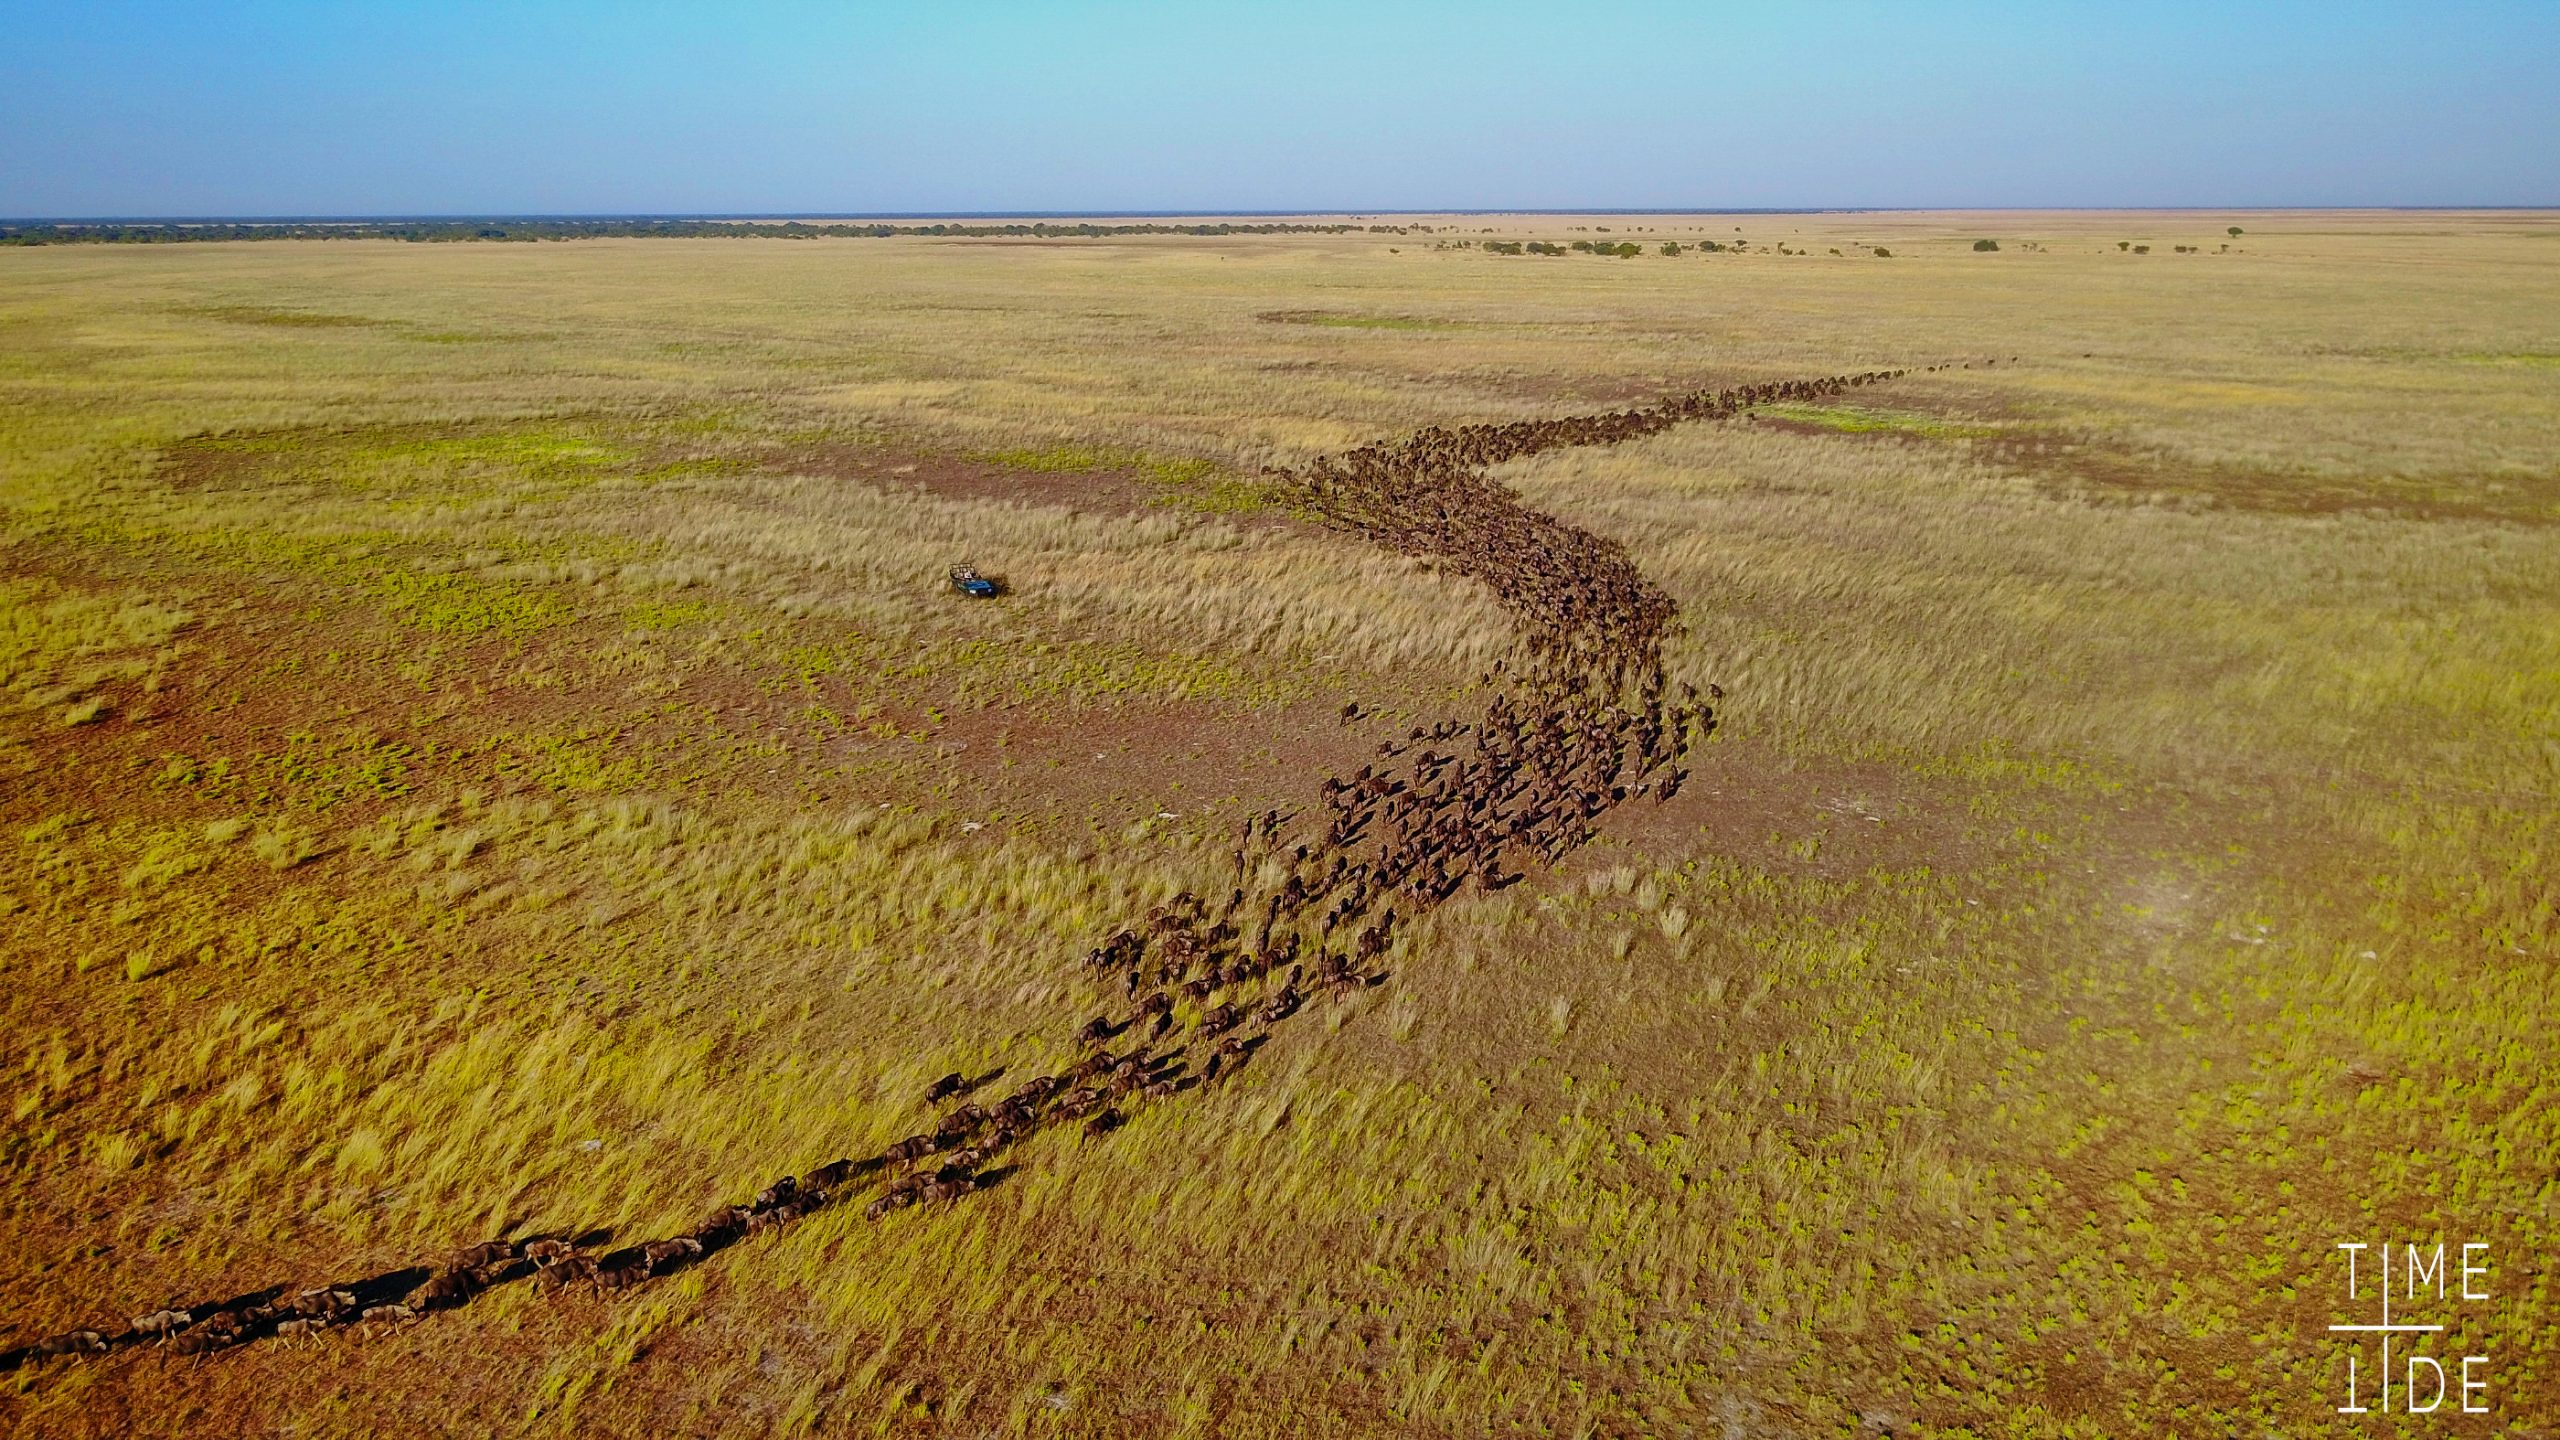 herd of wildebeest snaking across fields aerial view